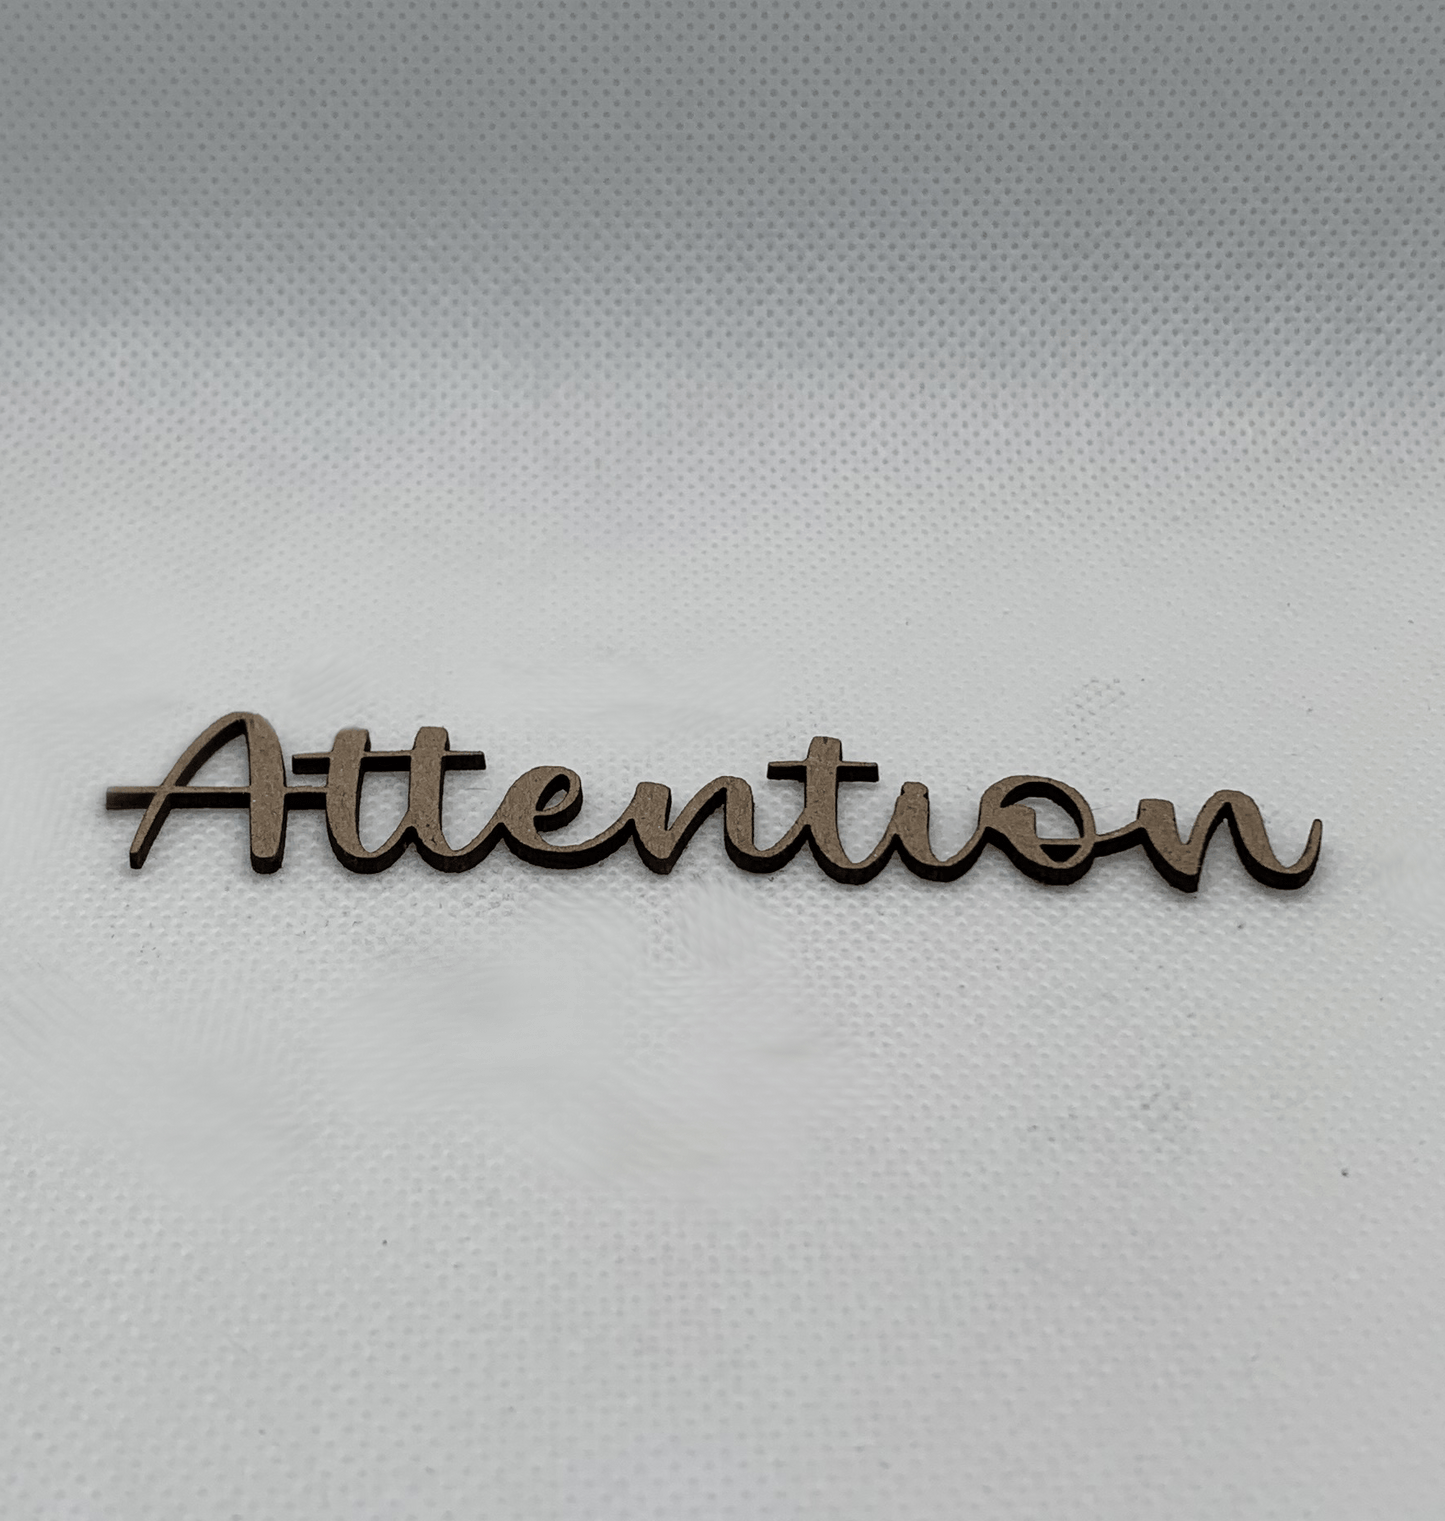 Attention! - Creative Designs By Kari